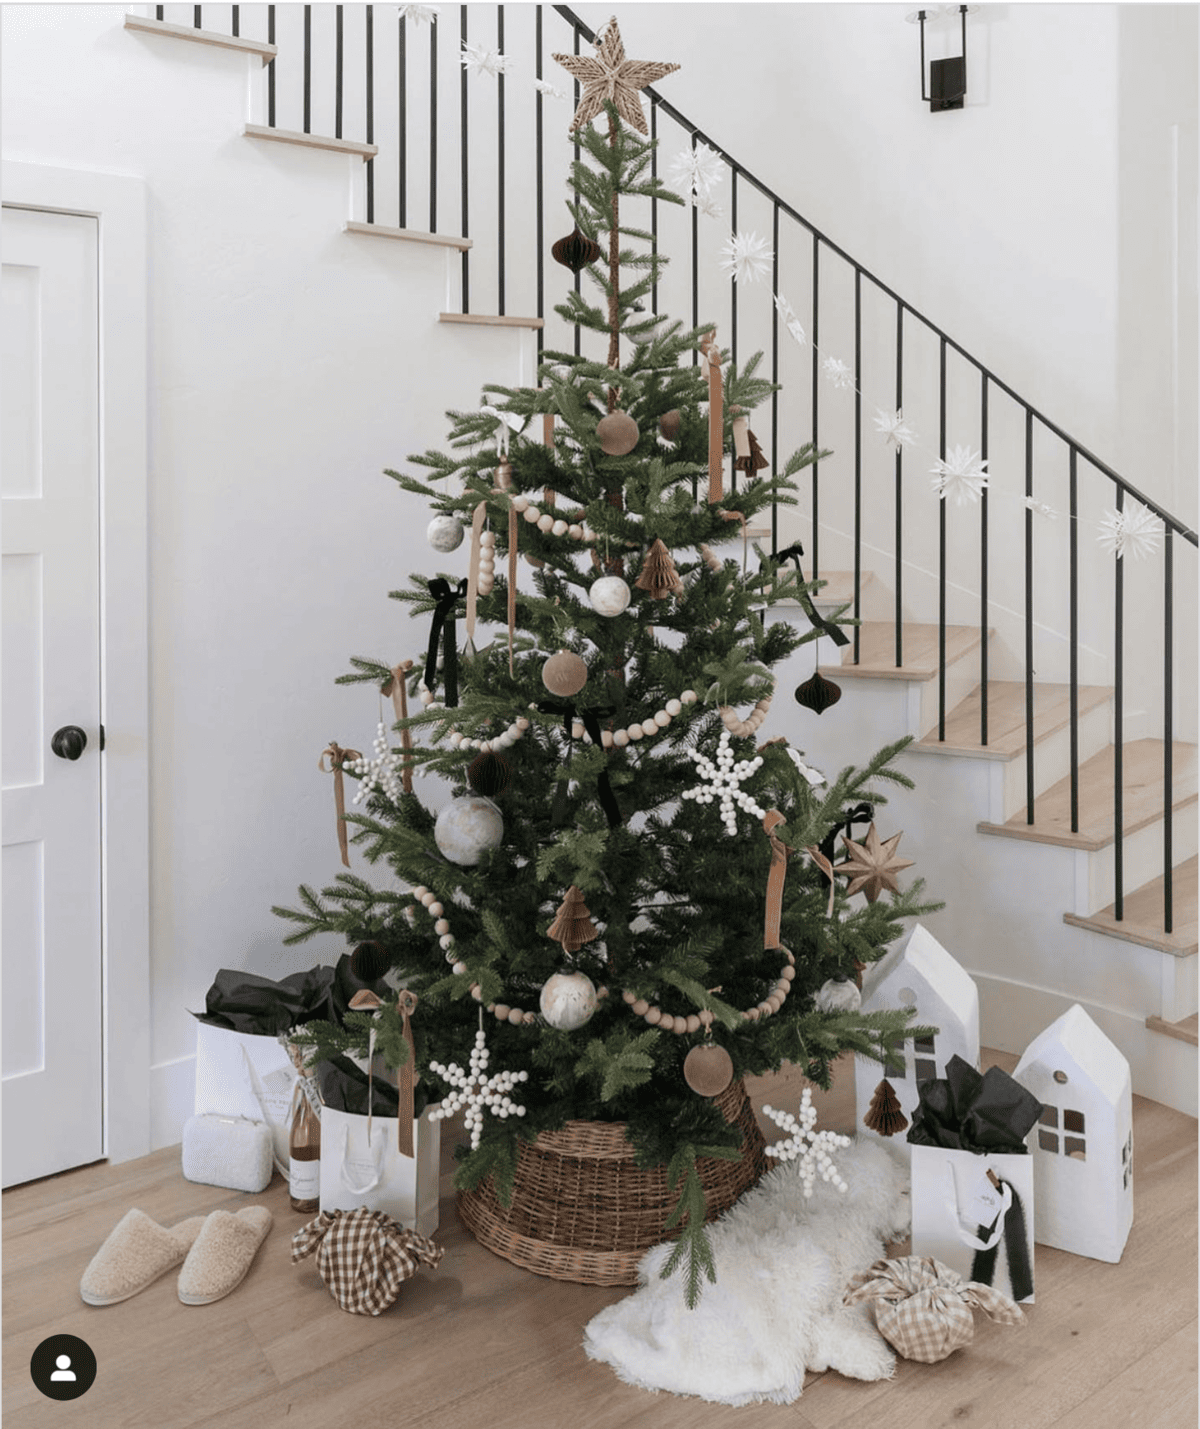 DIY Velvet Covered Christmas Ornaments - zevy joy